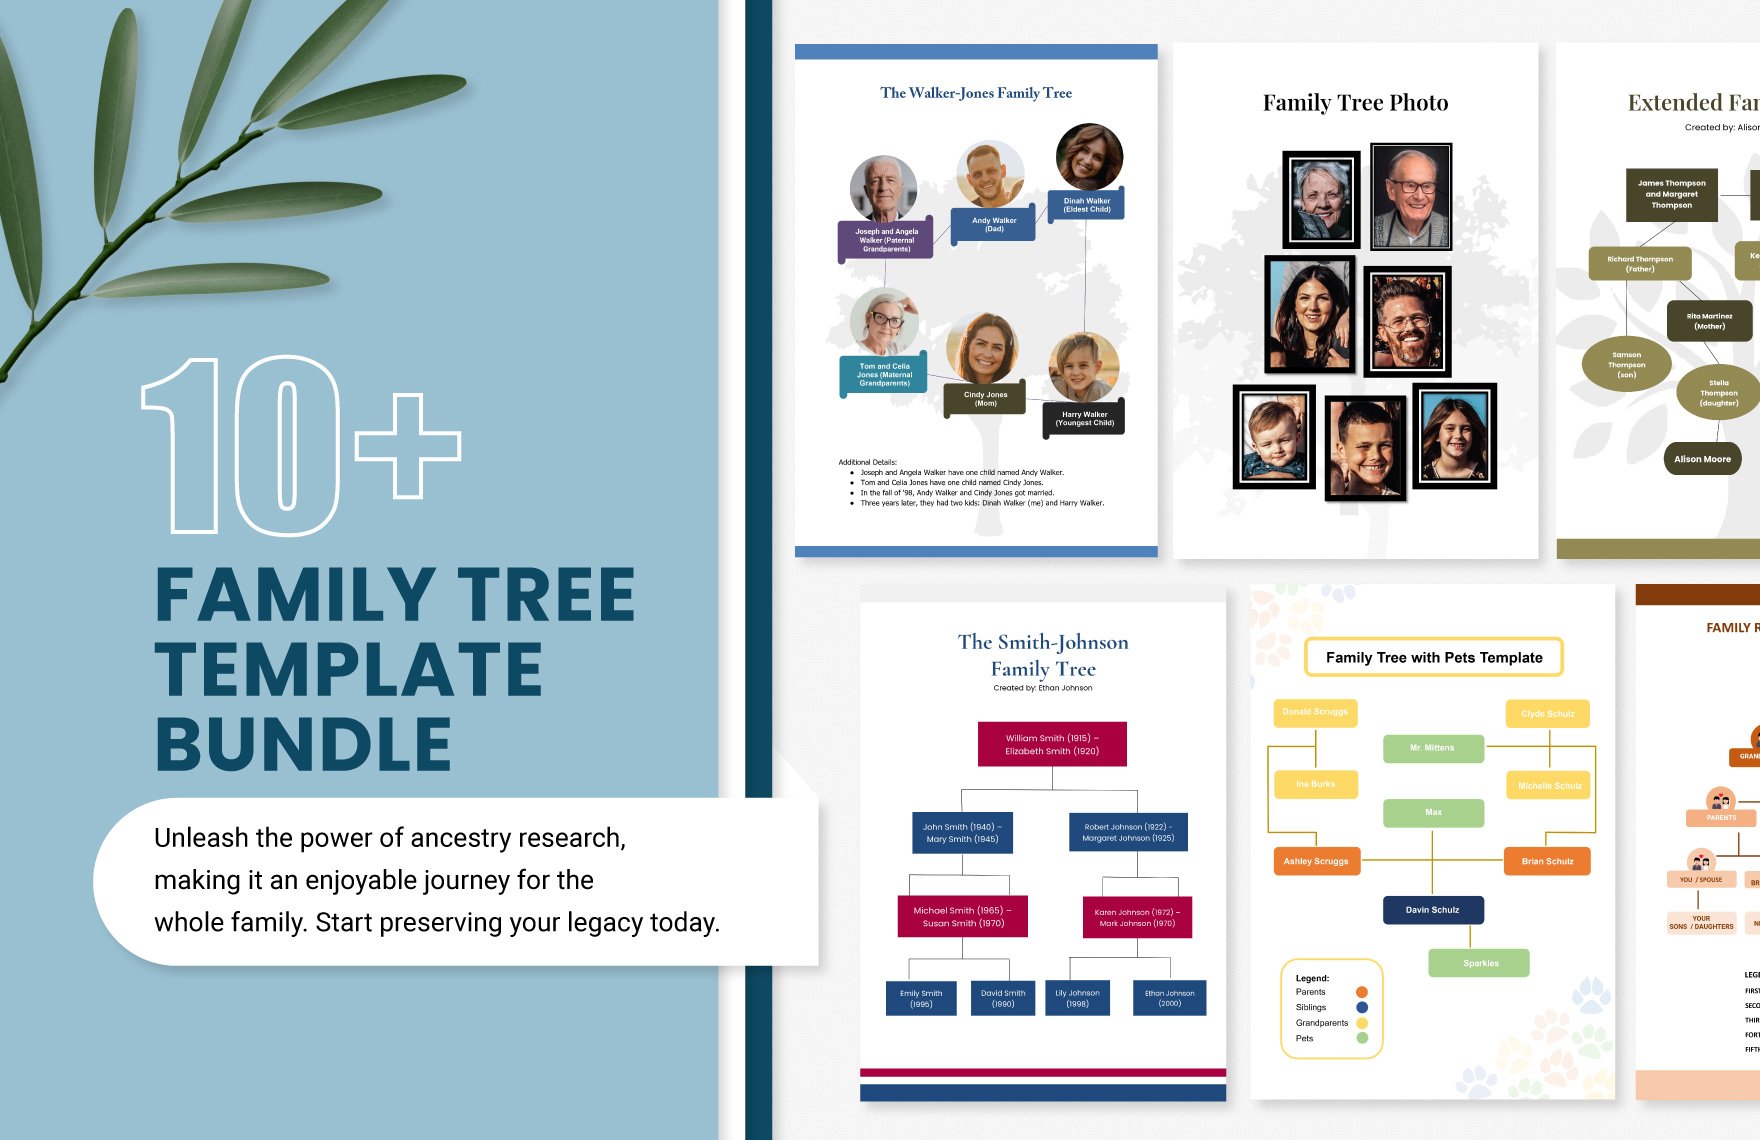 10+ Family Tree Template Bundle